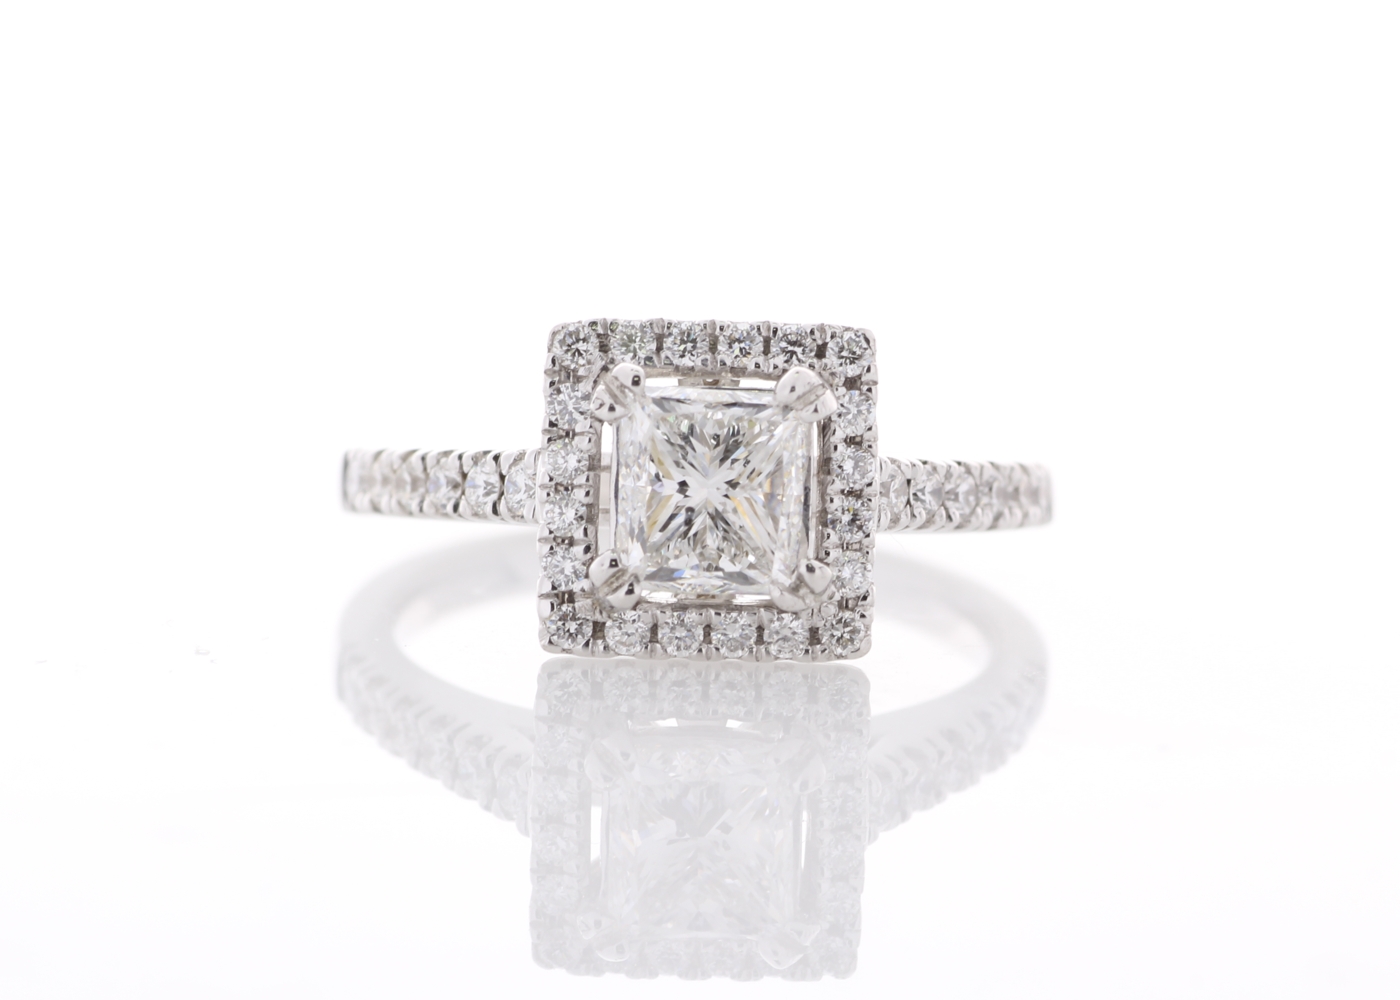 18ct White Gold Princess Cut Diamond Ring 1.34 Carats